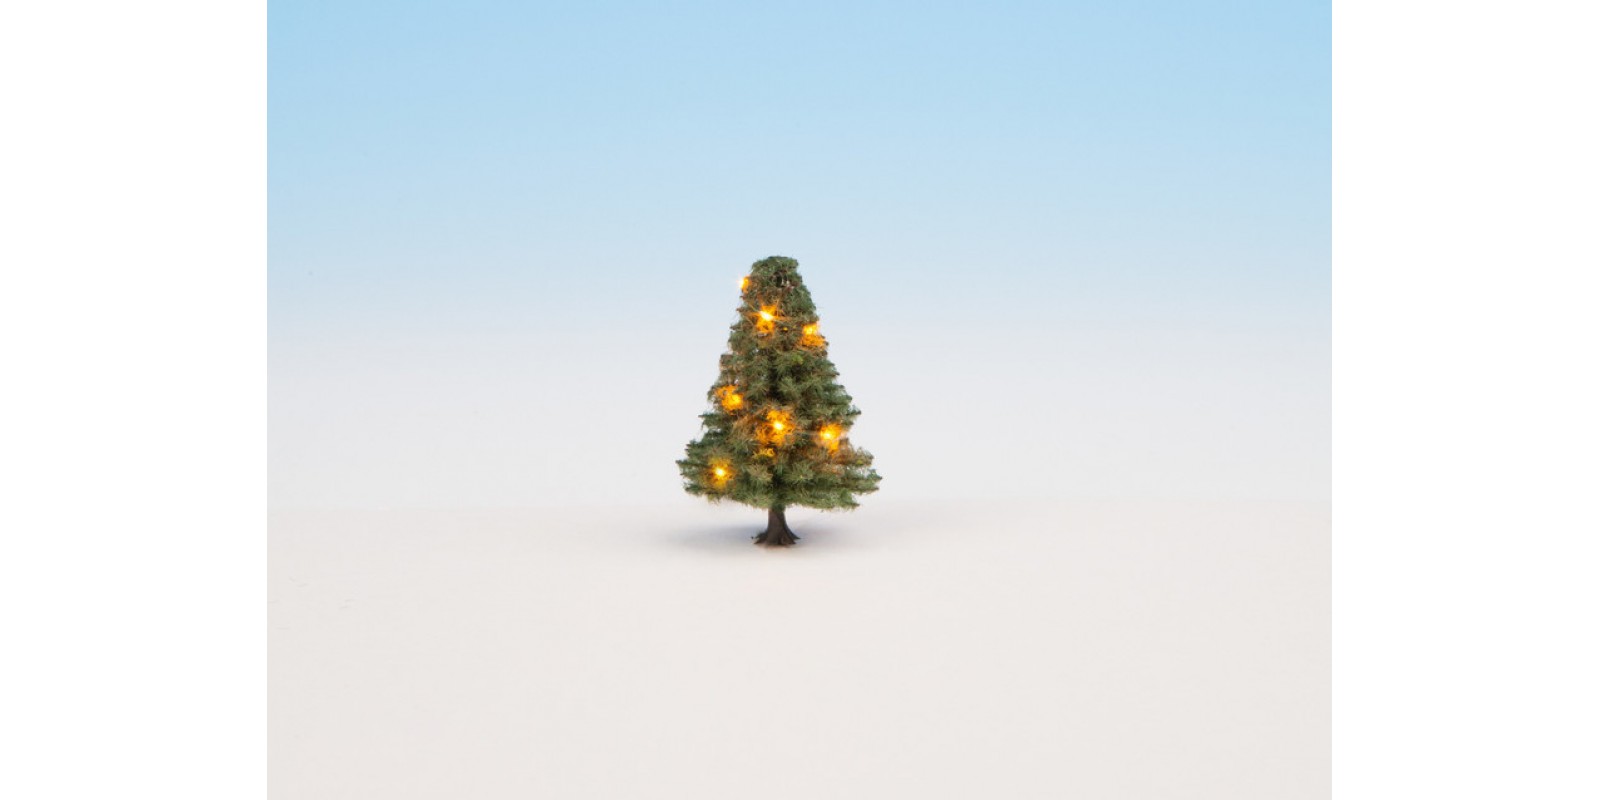 NO22111 Illuminated Christmas Tree green, with 10 LEDs, 5 cm high